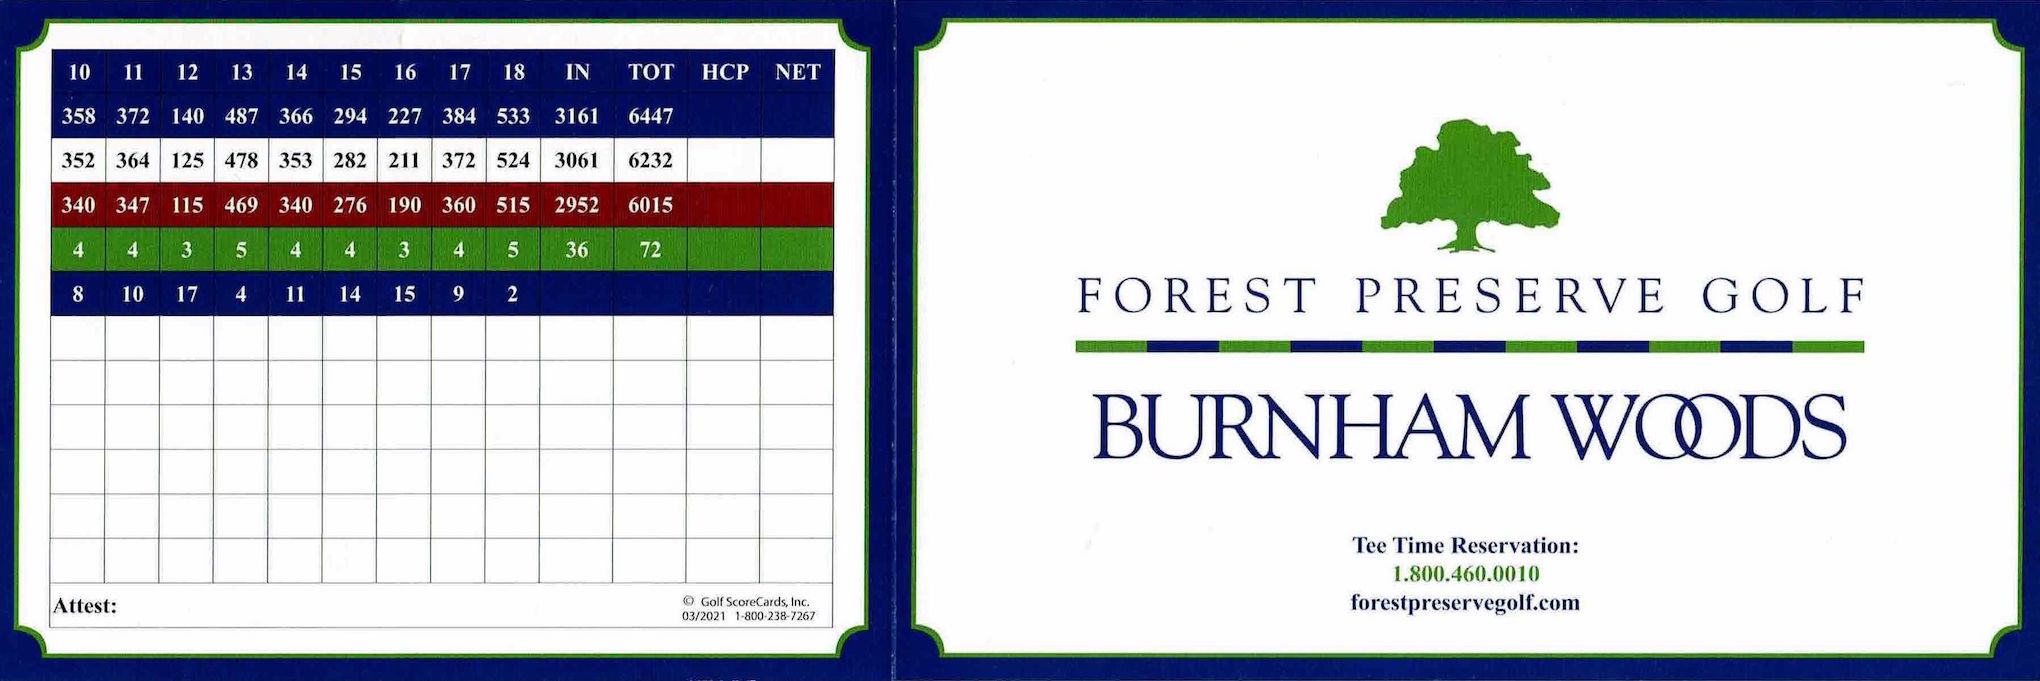 Scan of the scorecard from Burnham Woods Golf Course in Burnham, Illinois. 